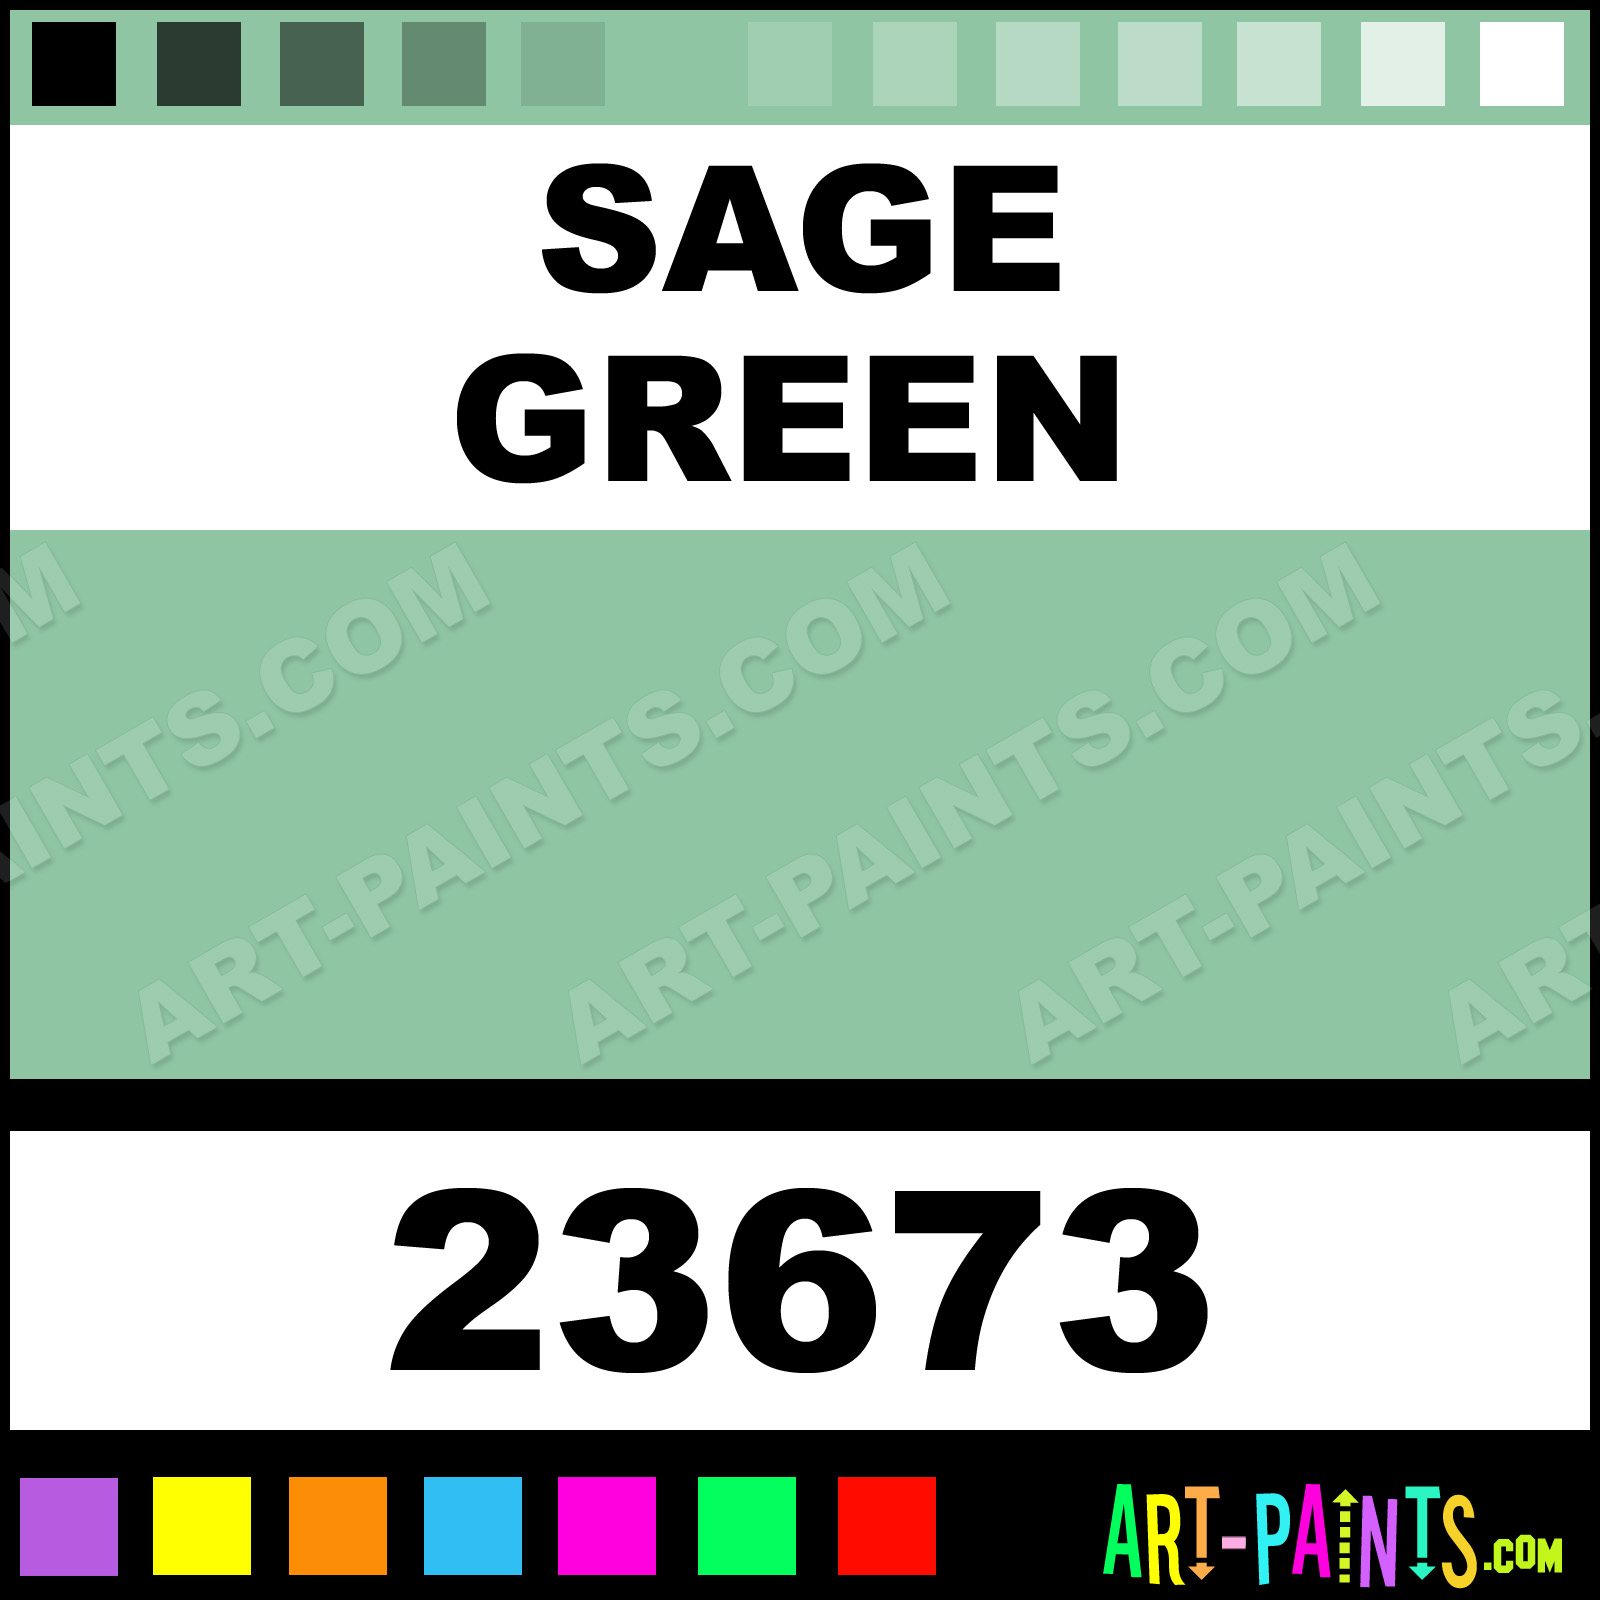 Sage Green Artist Acrylic Paints - 23673 - Sage Green Paint, Sage